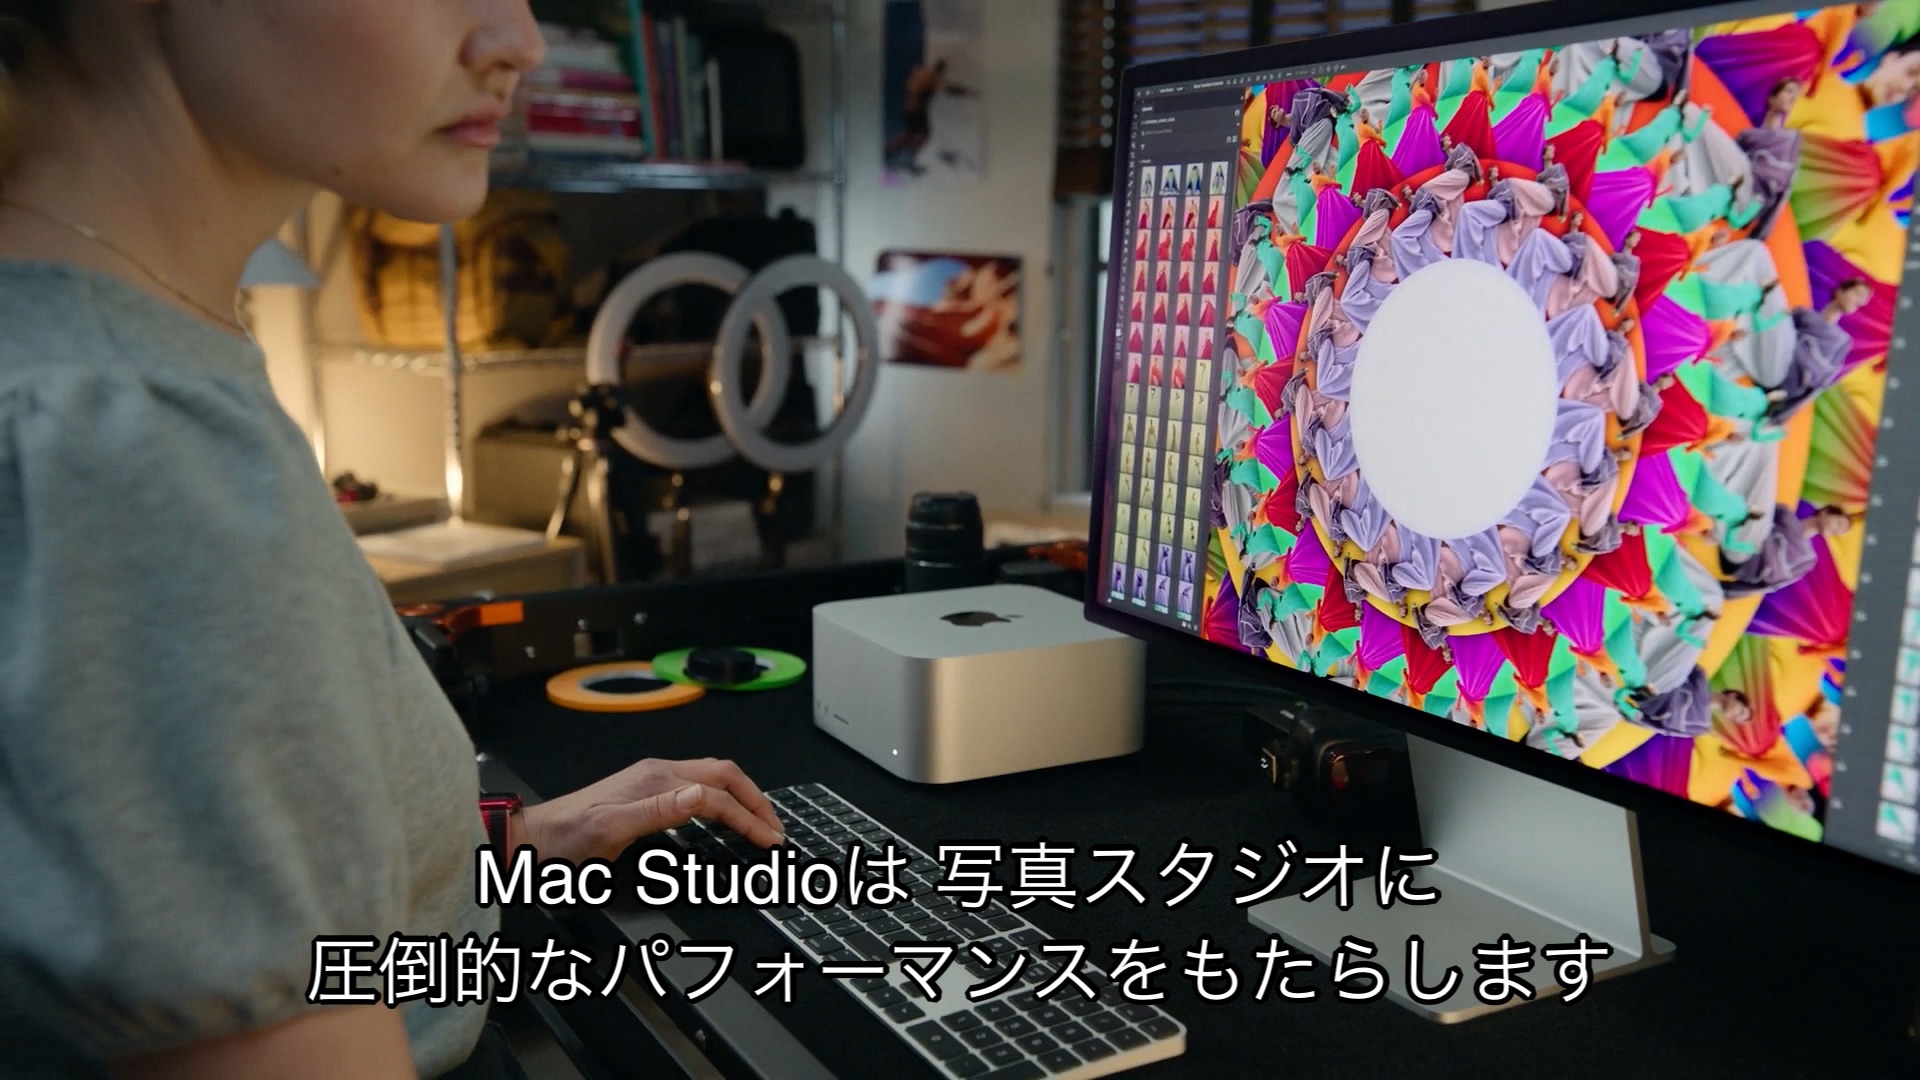 Mac Studio in Photo Studio